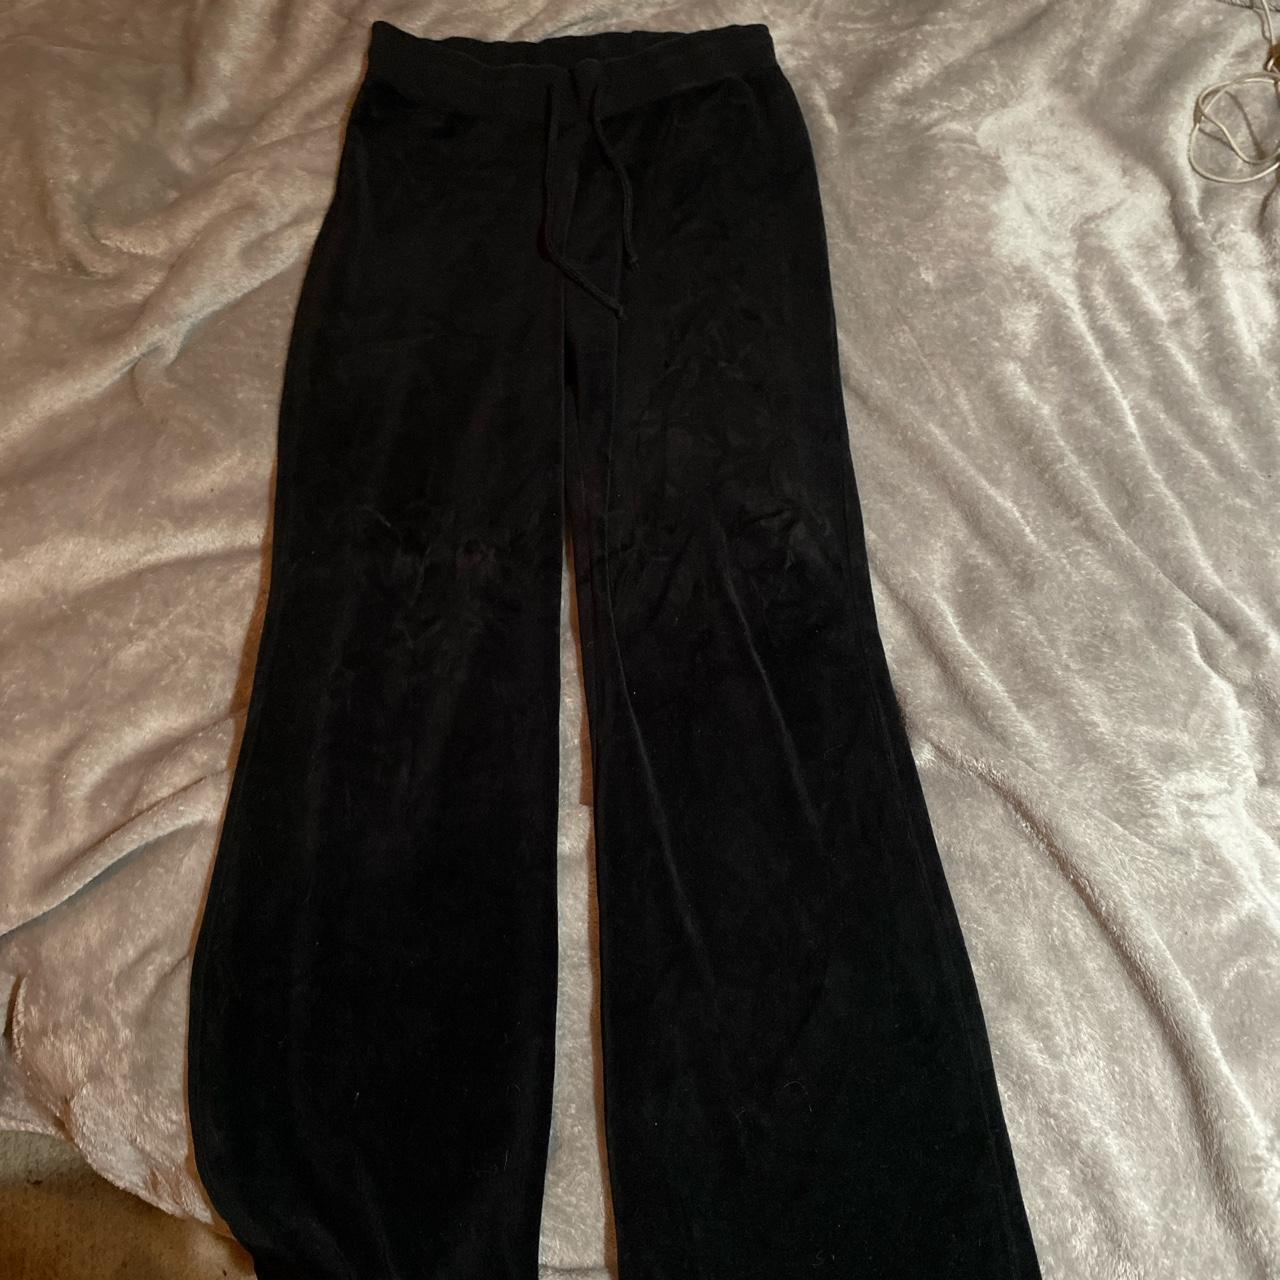 black velvet flare pants like juicy couture size m/s - Depop